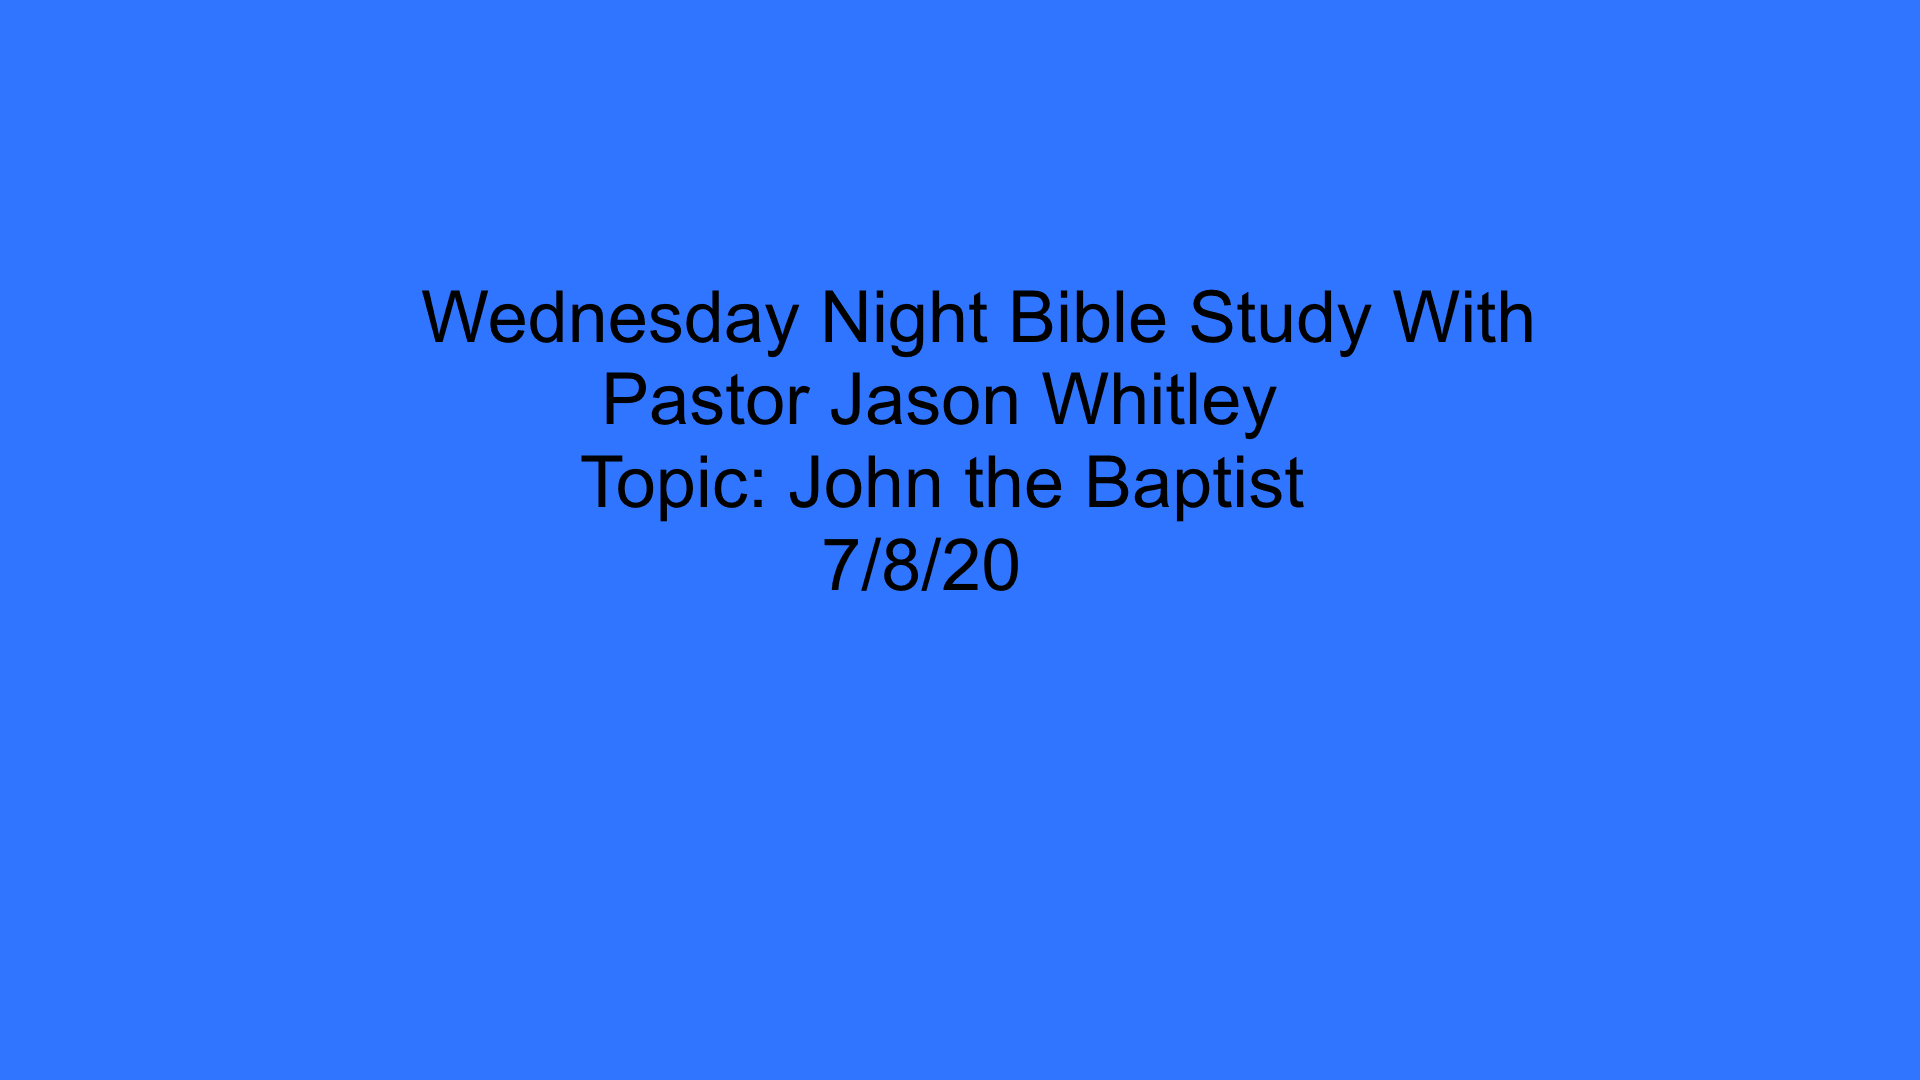 Wednesday Night Bible Study 7/8/20